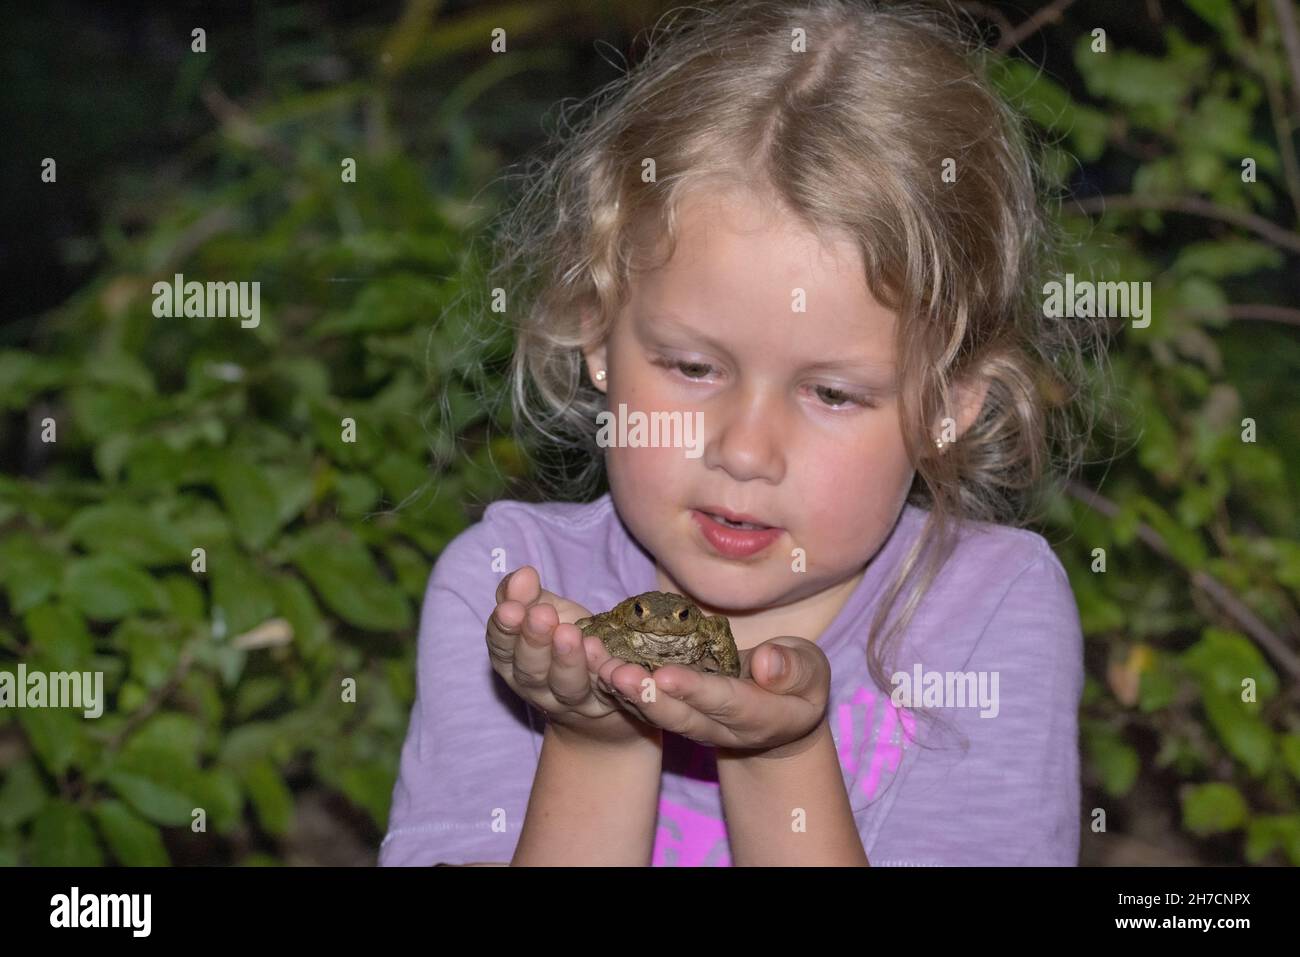 Sapo común europeo (Bufo bufo), niña con un hueco de dientes cuidadosamente sosteniendo un sapo común en sus manos , Alemania Foto de stock